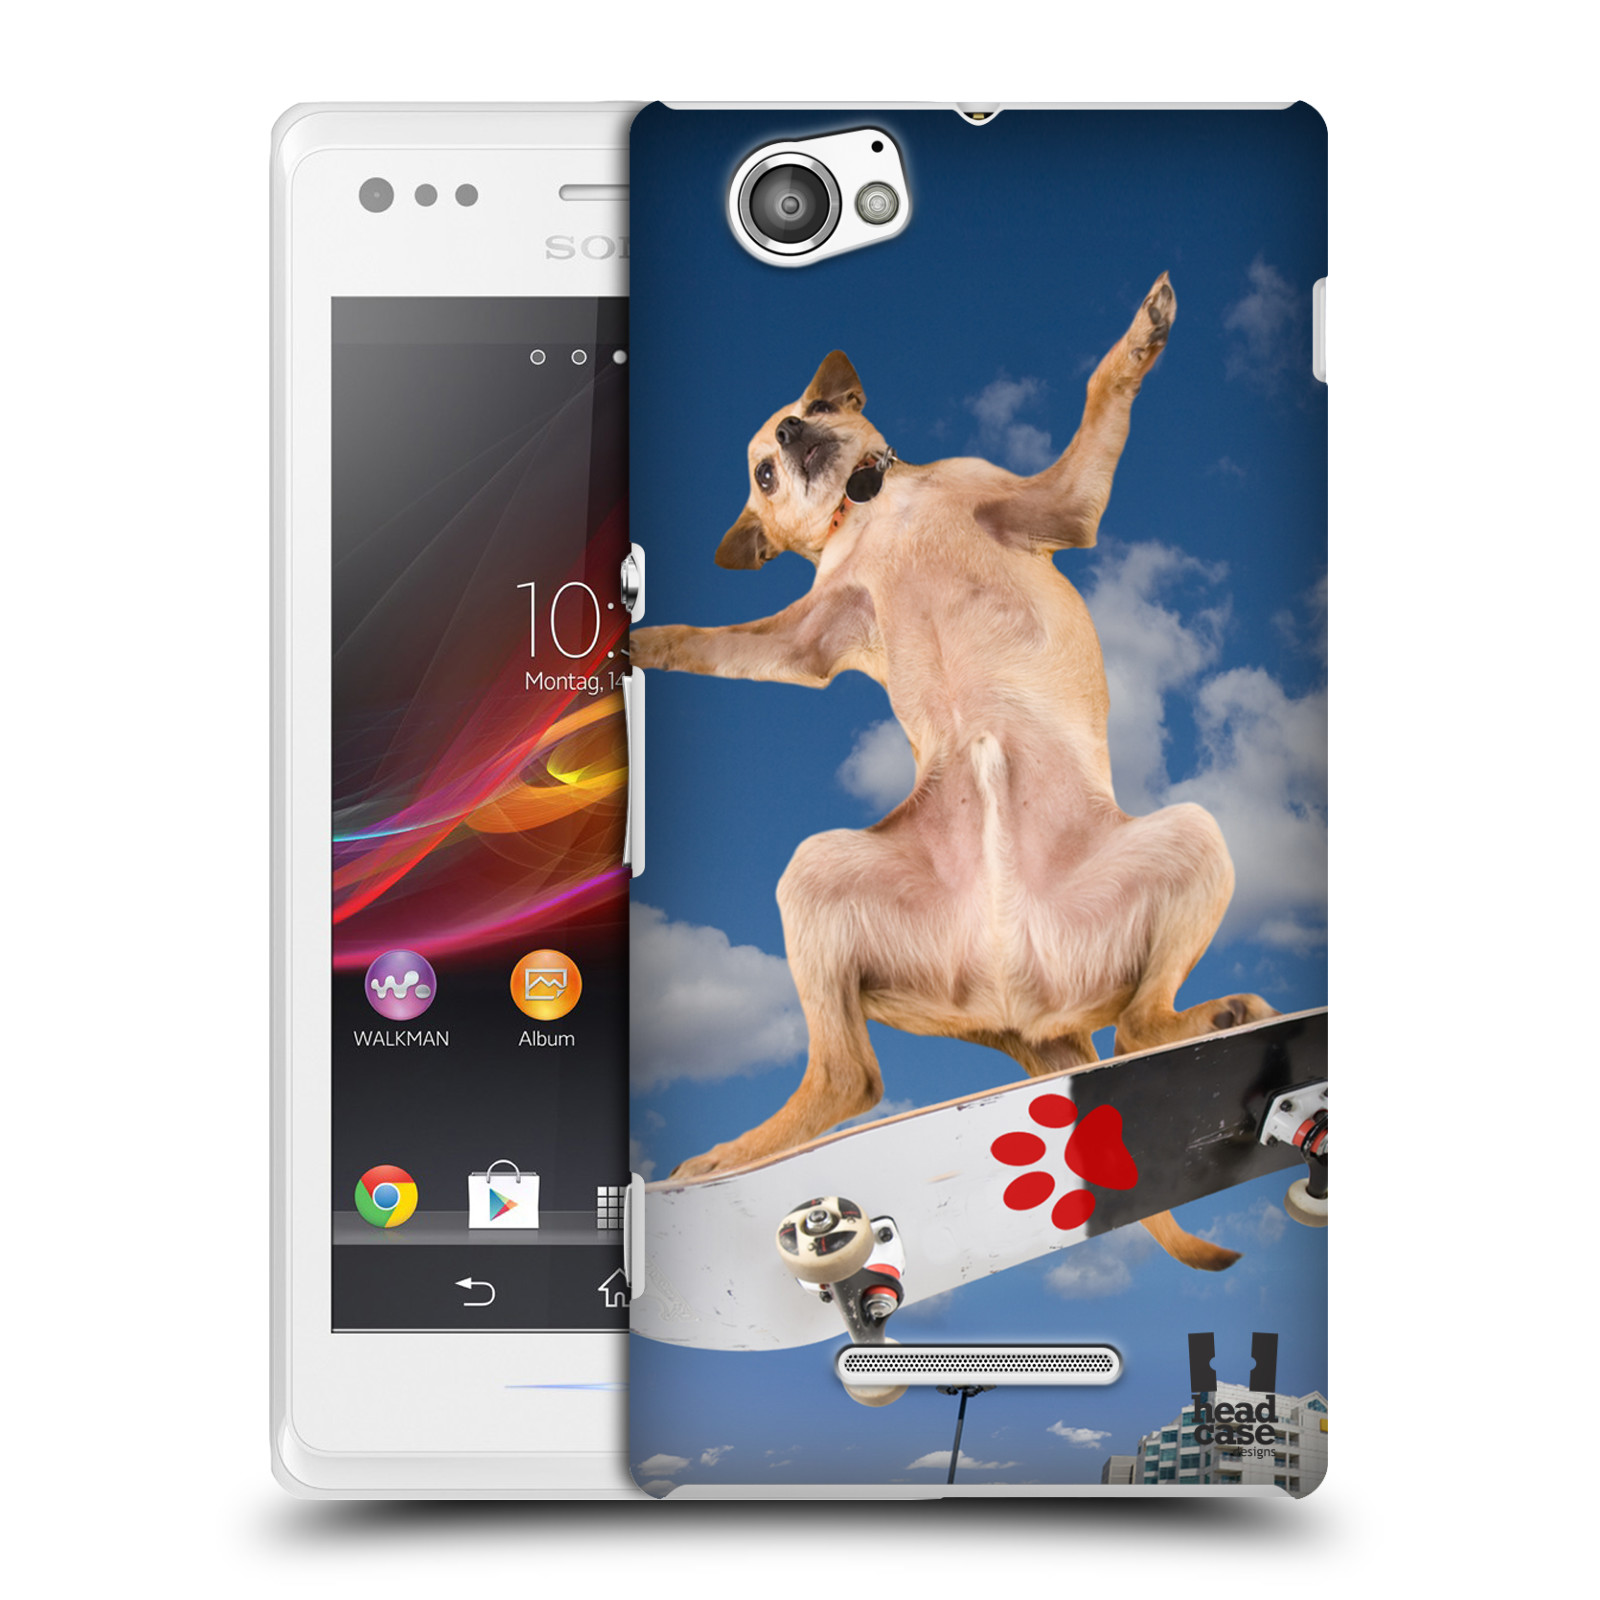 HEAD CASE plastový obal na mobil Sony Xperia M vzor Legrační zvířátka pejsek skateboard